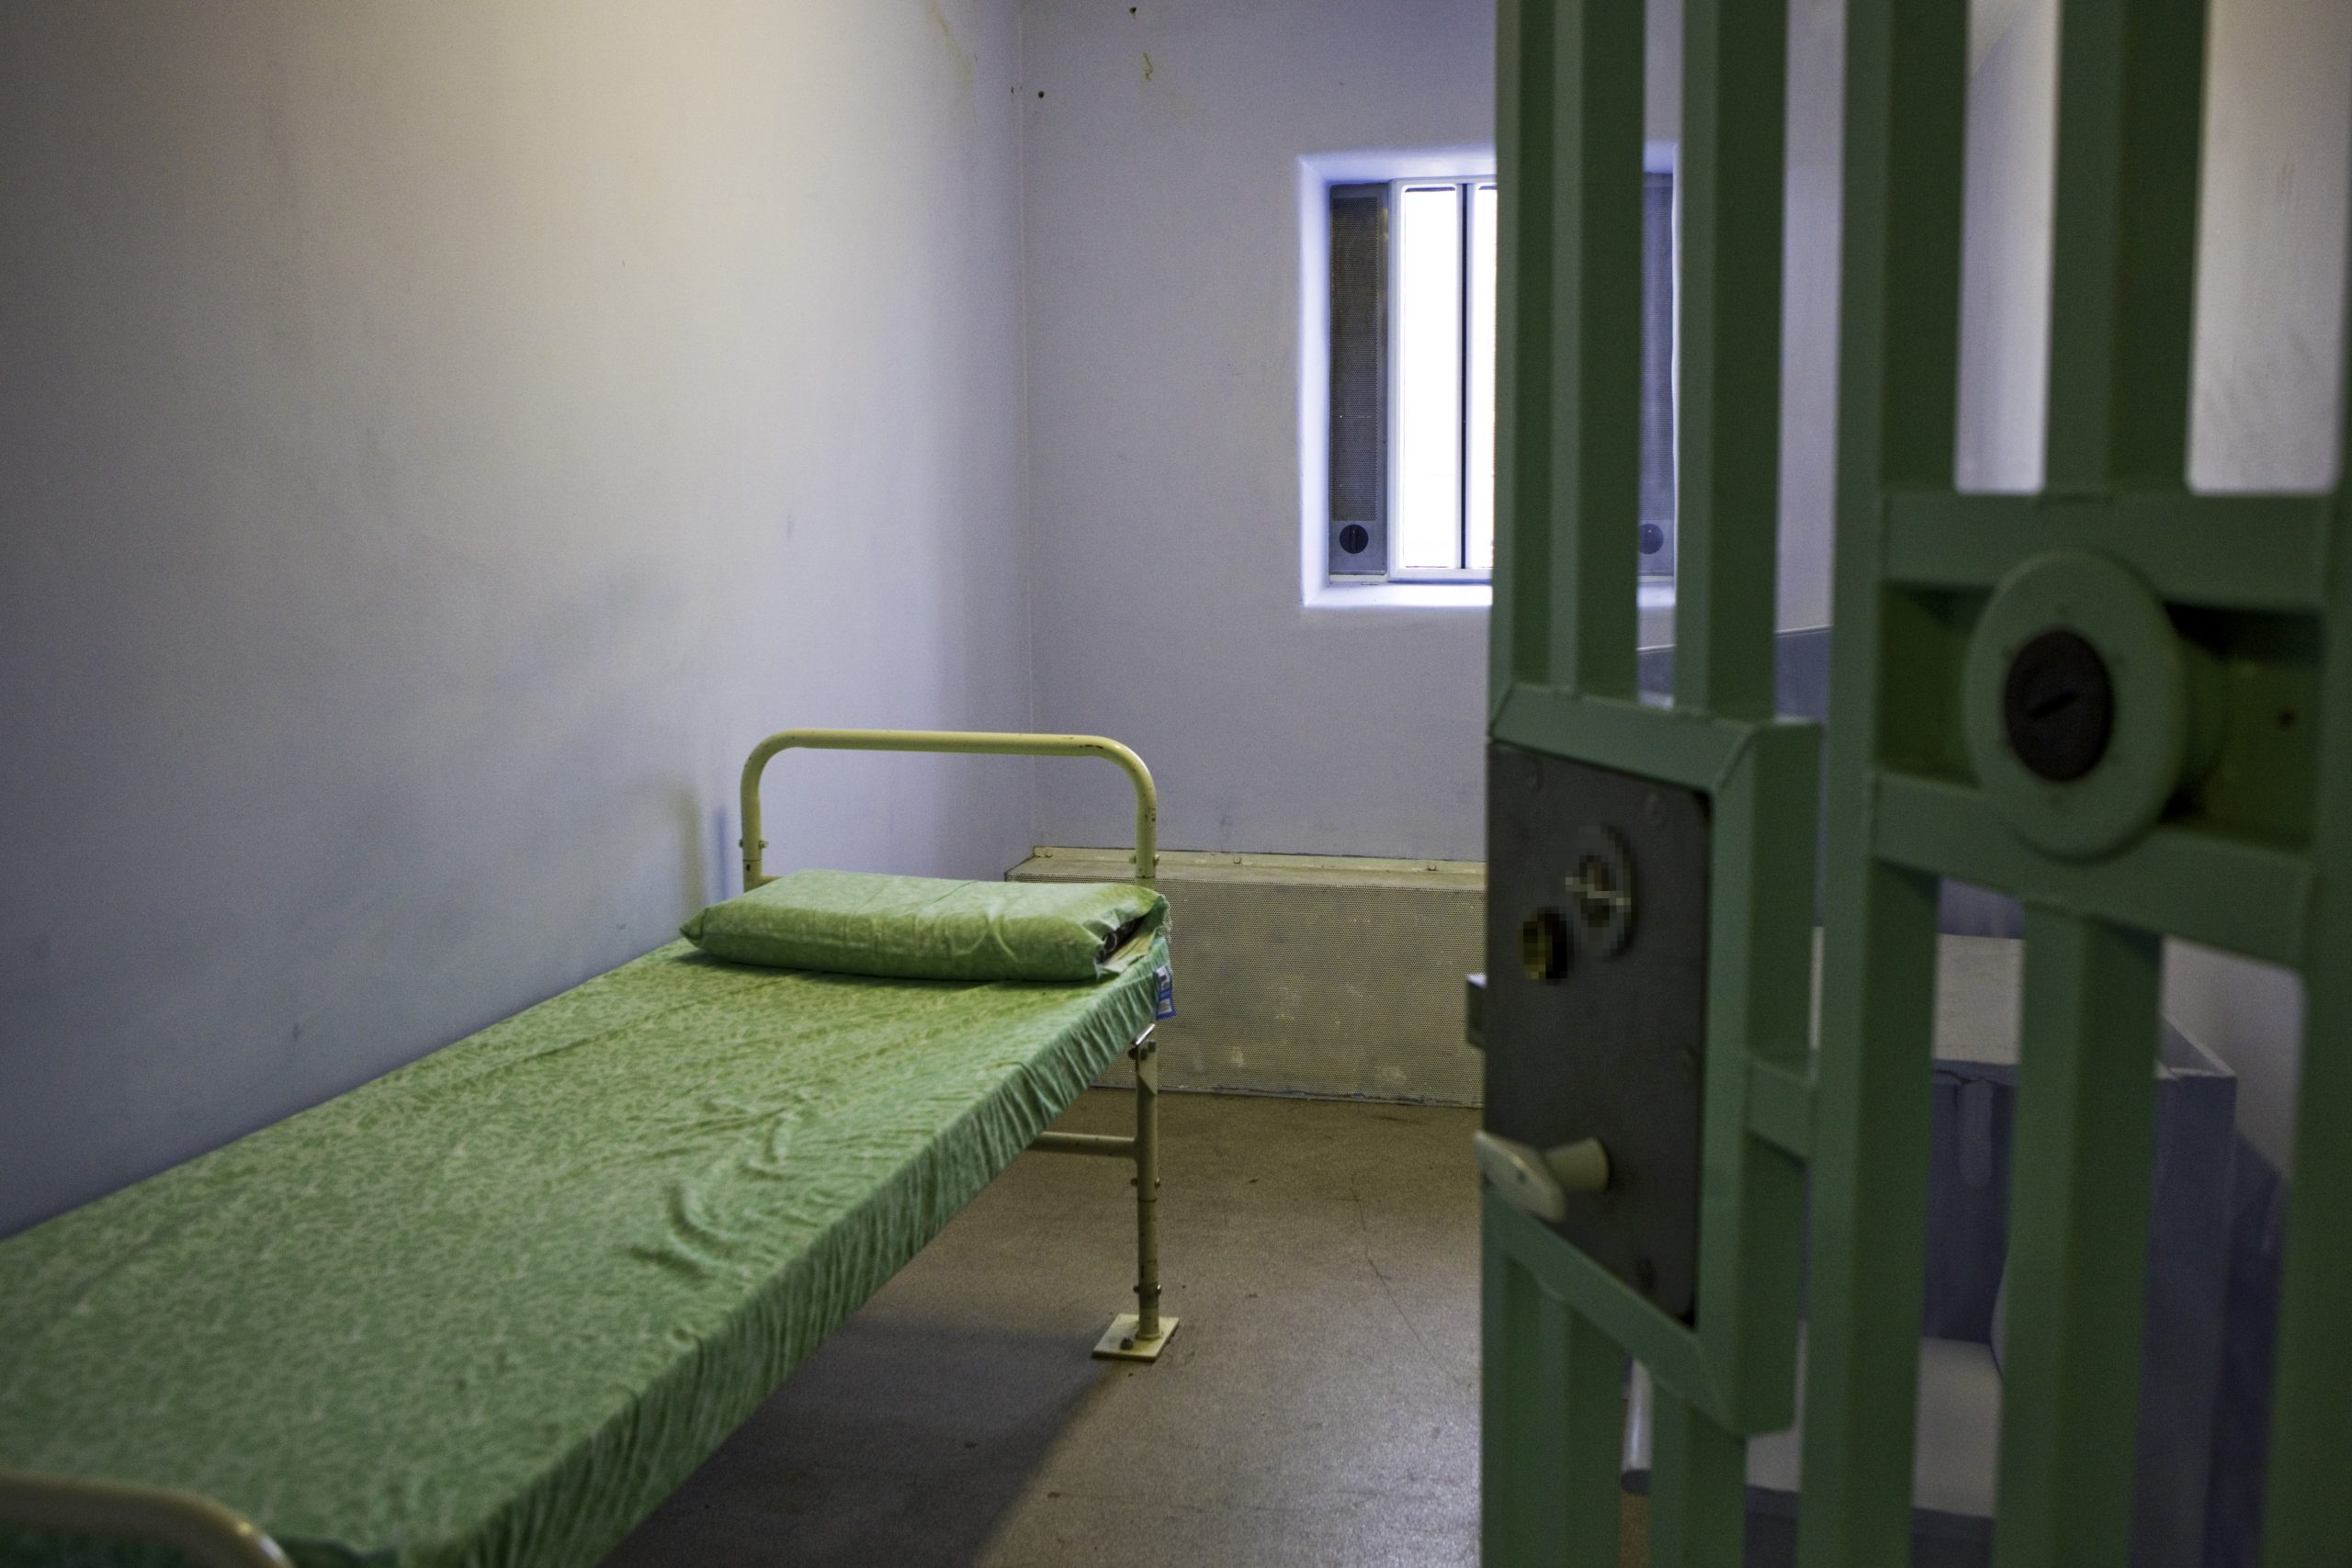 United Kingdom – Prison – YOI Aylesbury